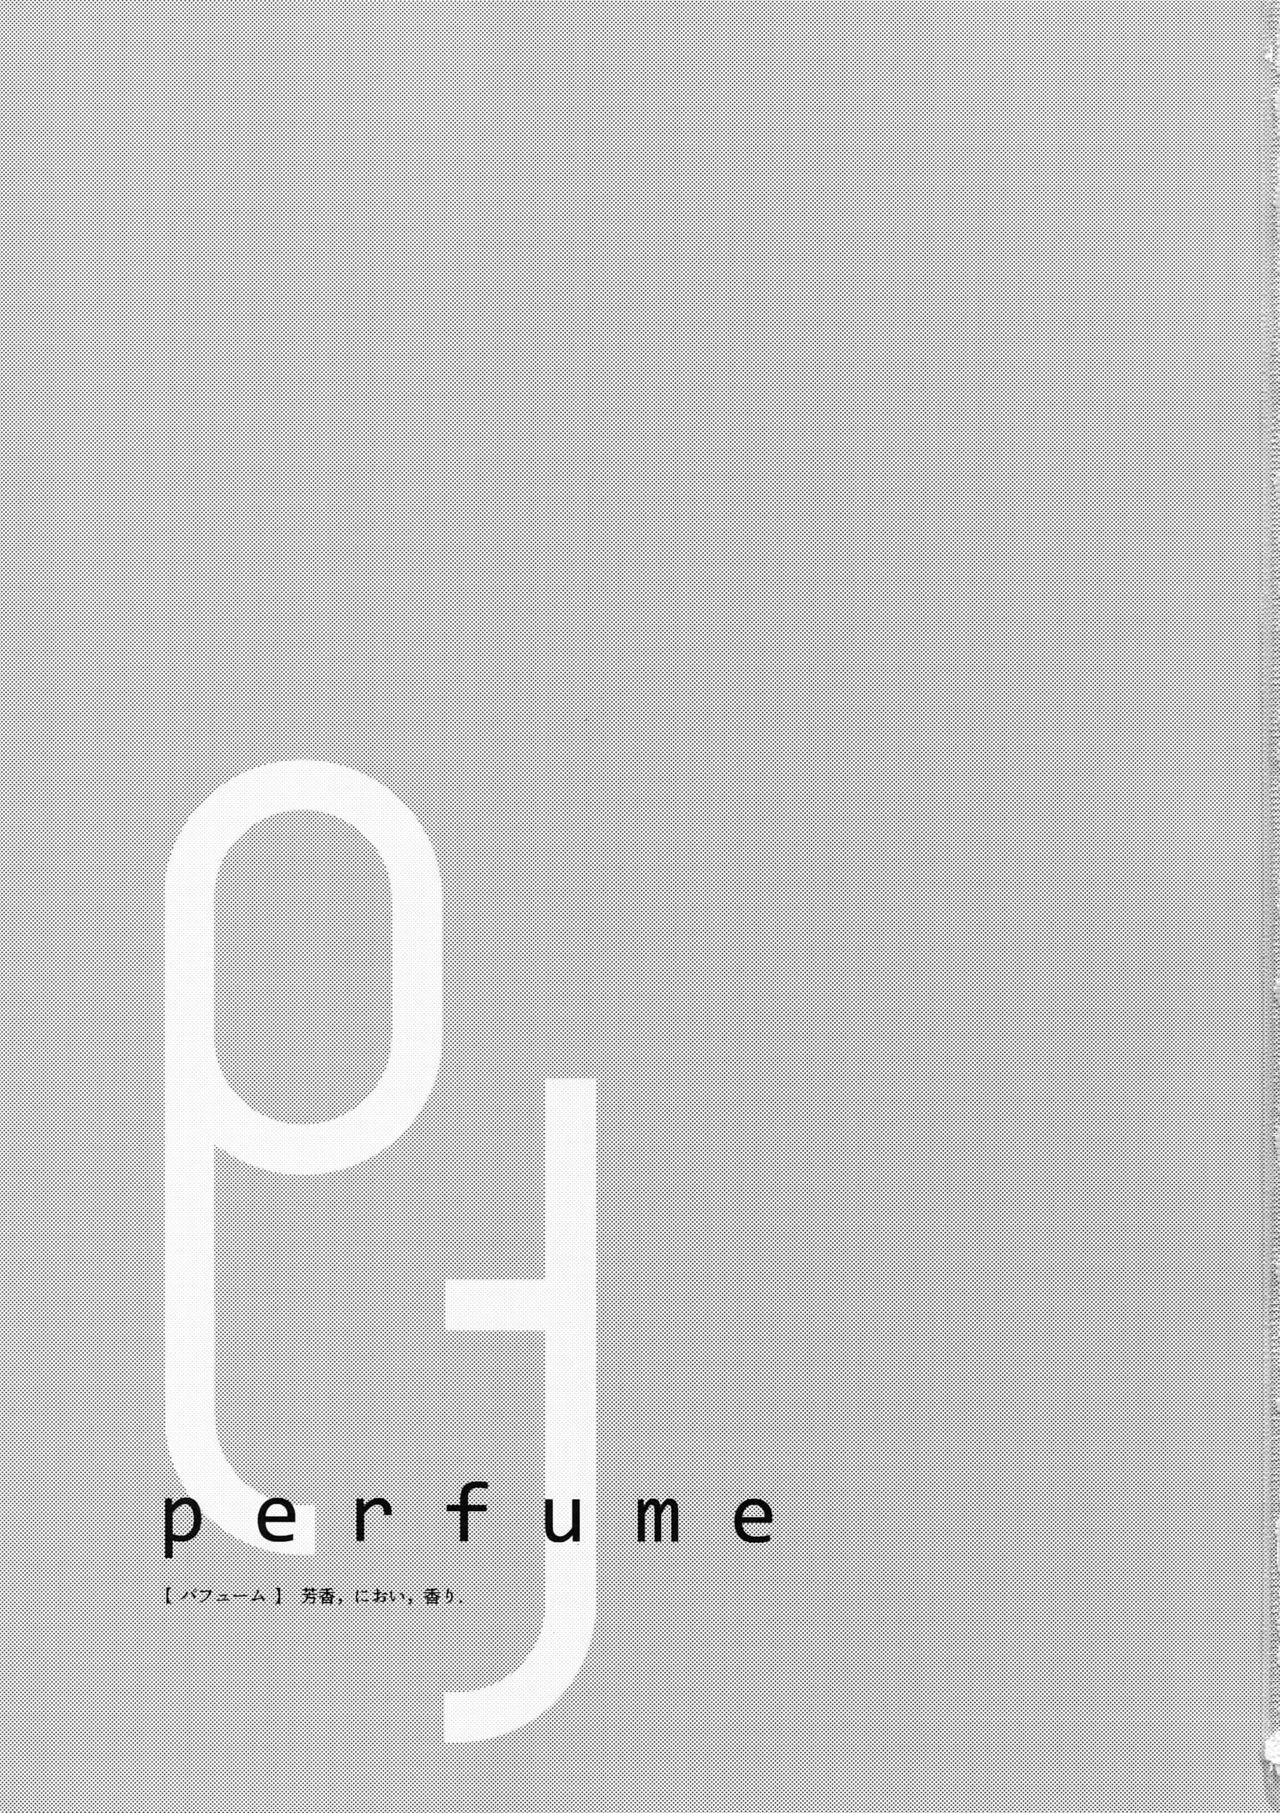 Perfume 2